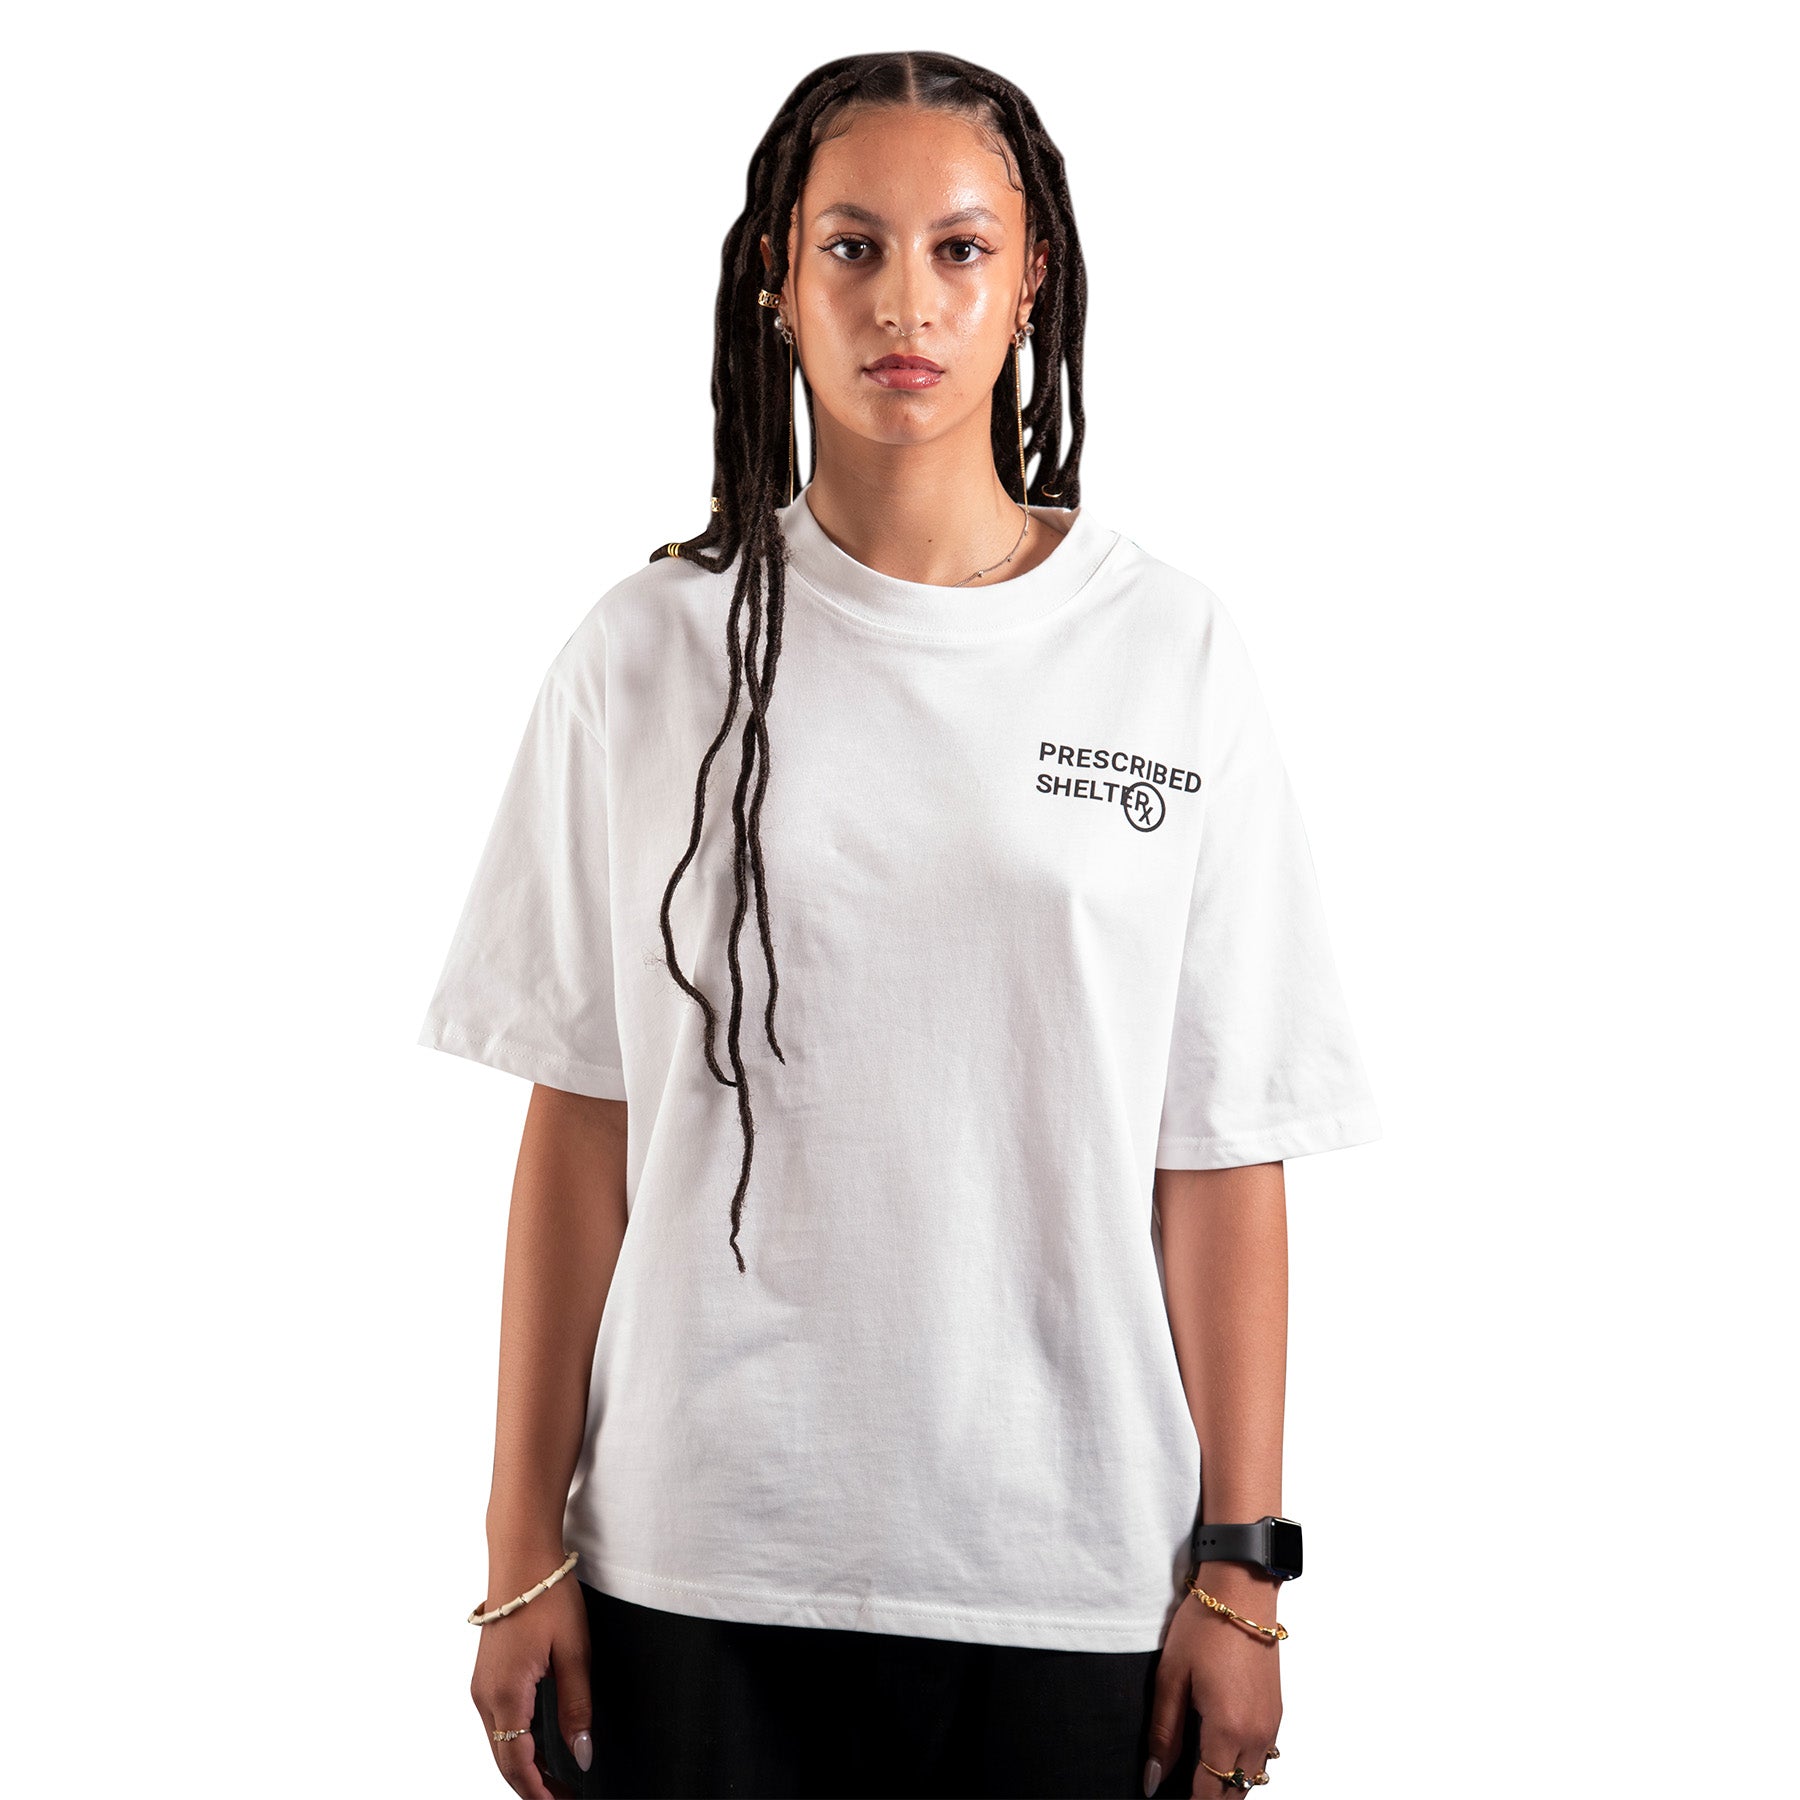 Promotional T-Shirt (White)